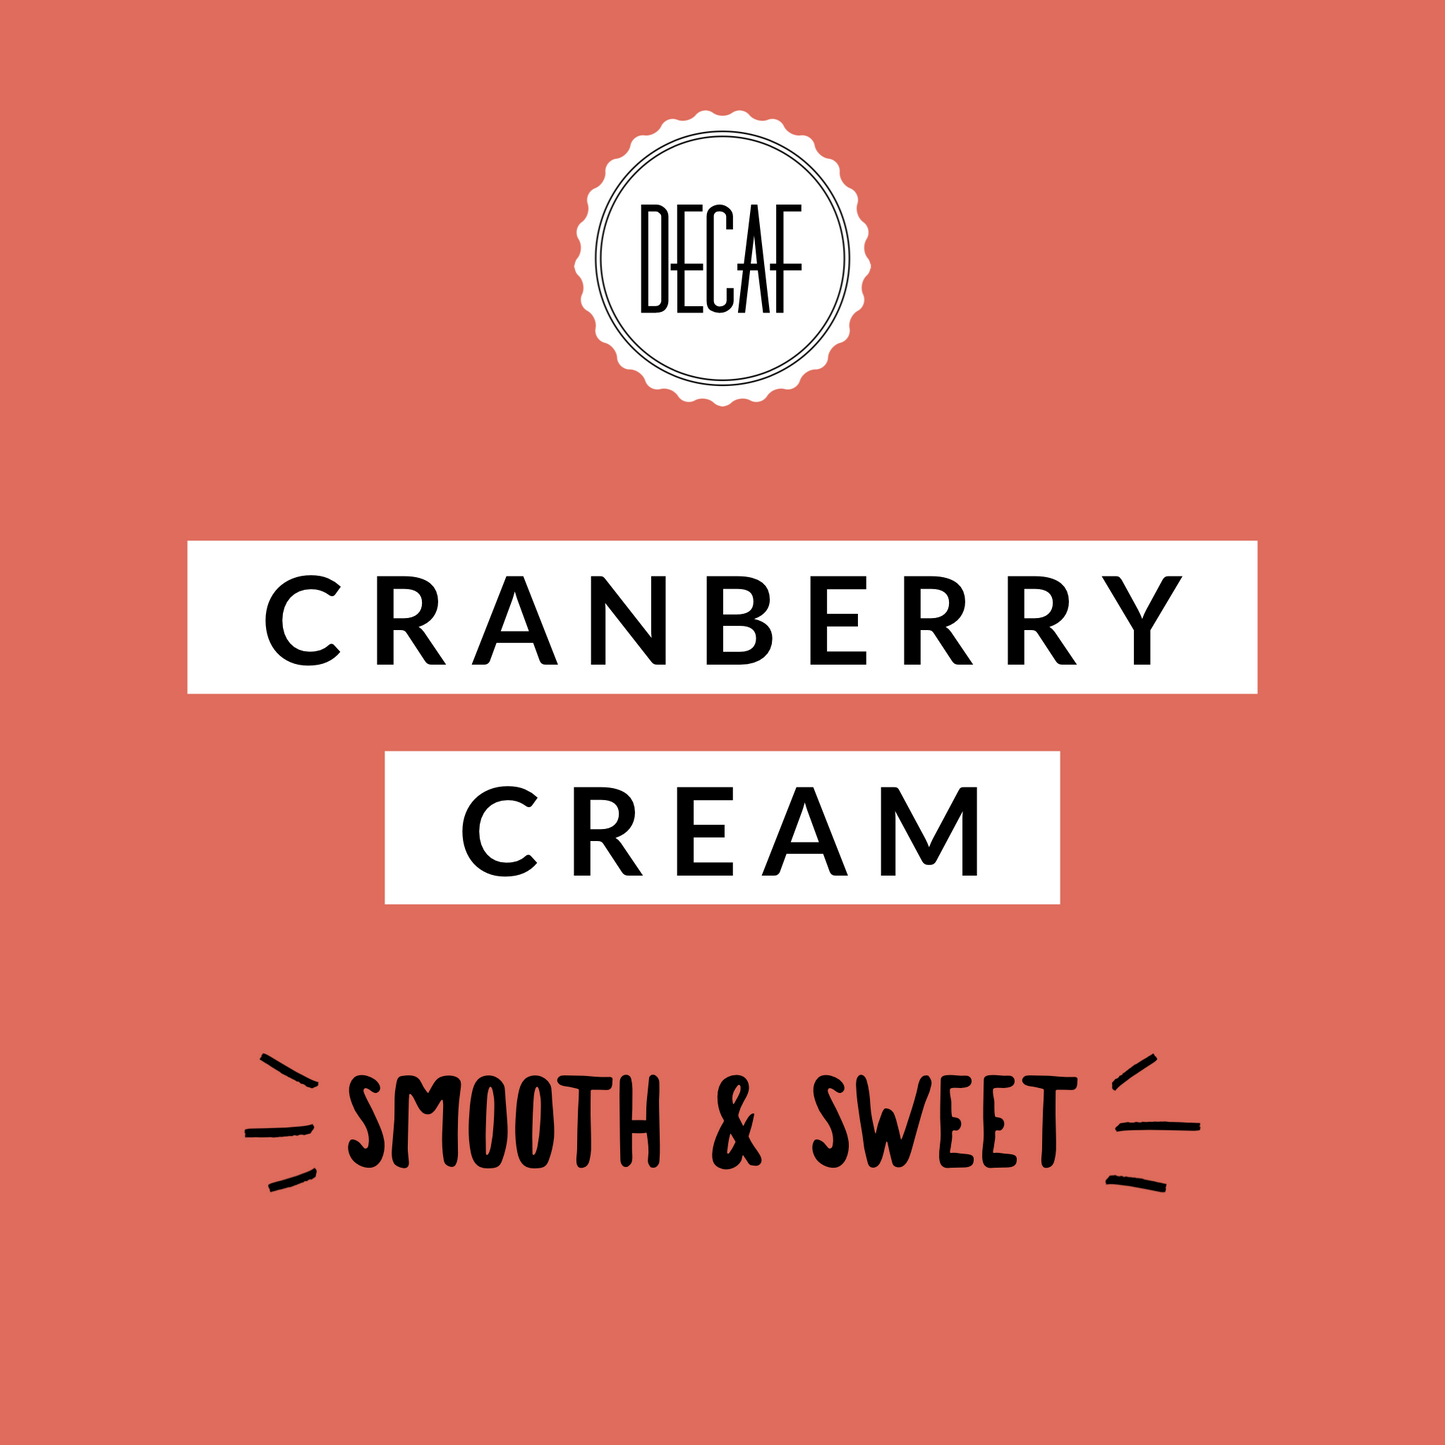 Cranberry Cream Decaf